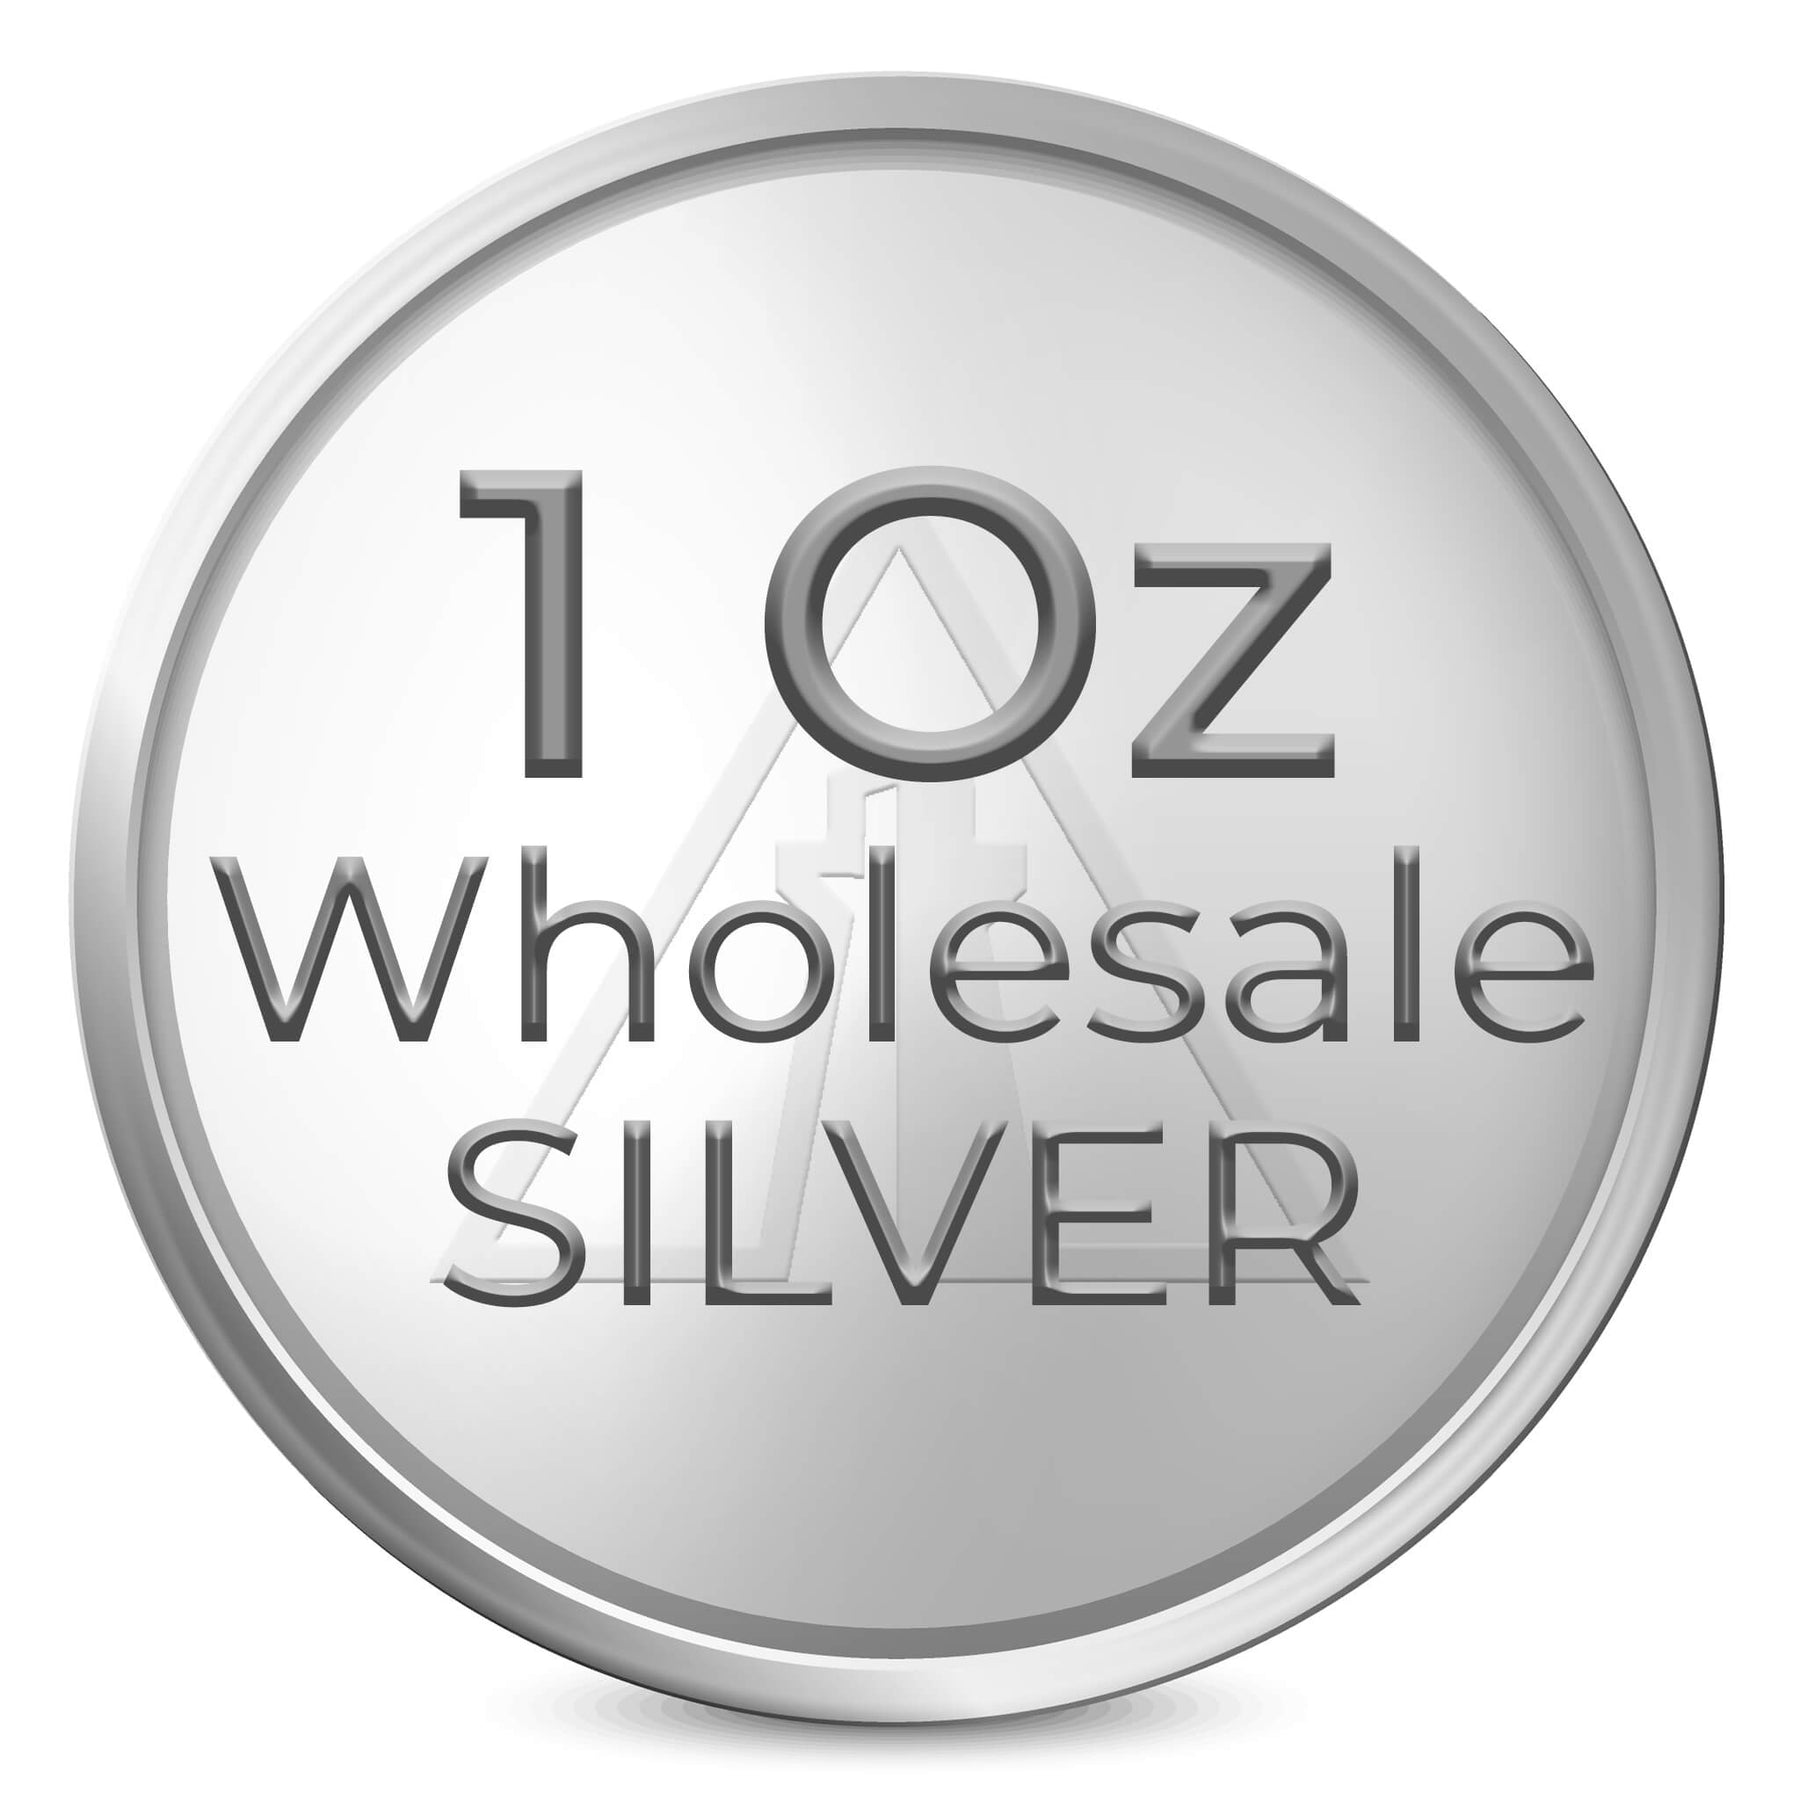 Wholesale Silver Bullion